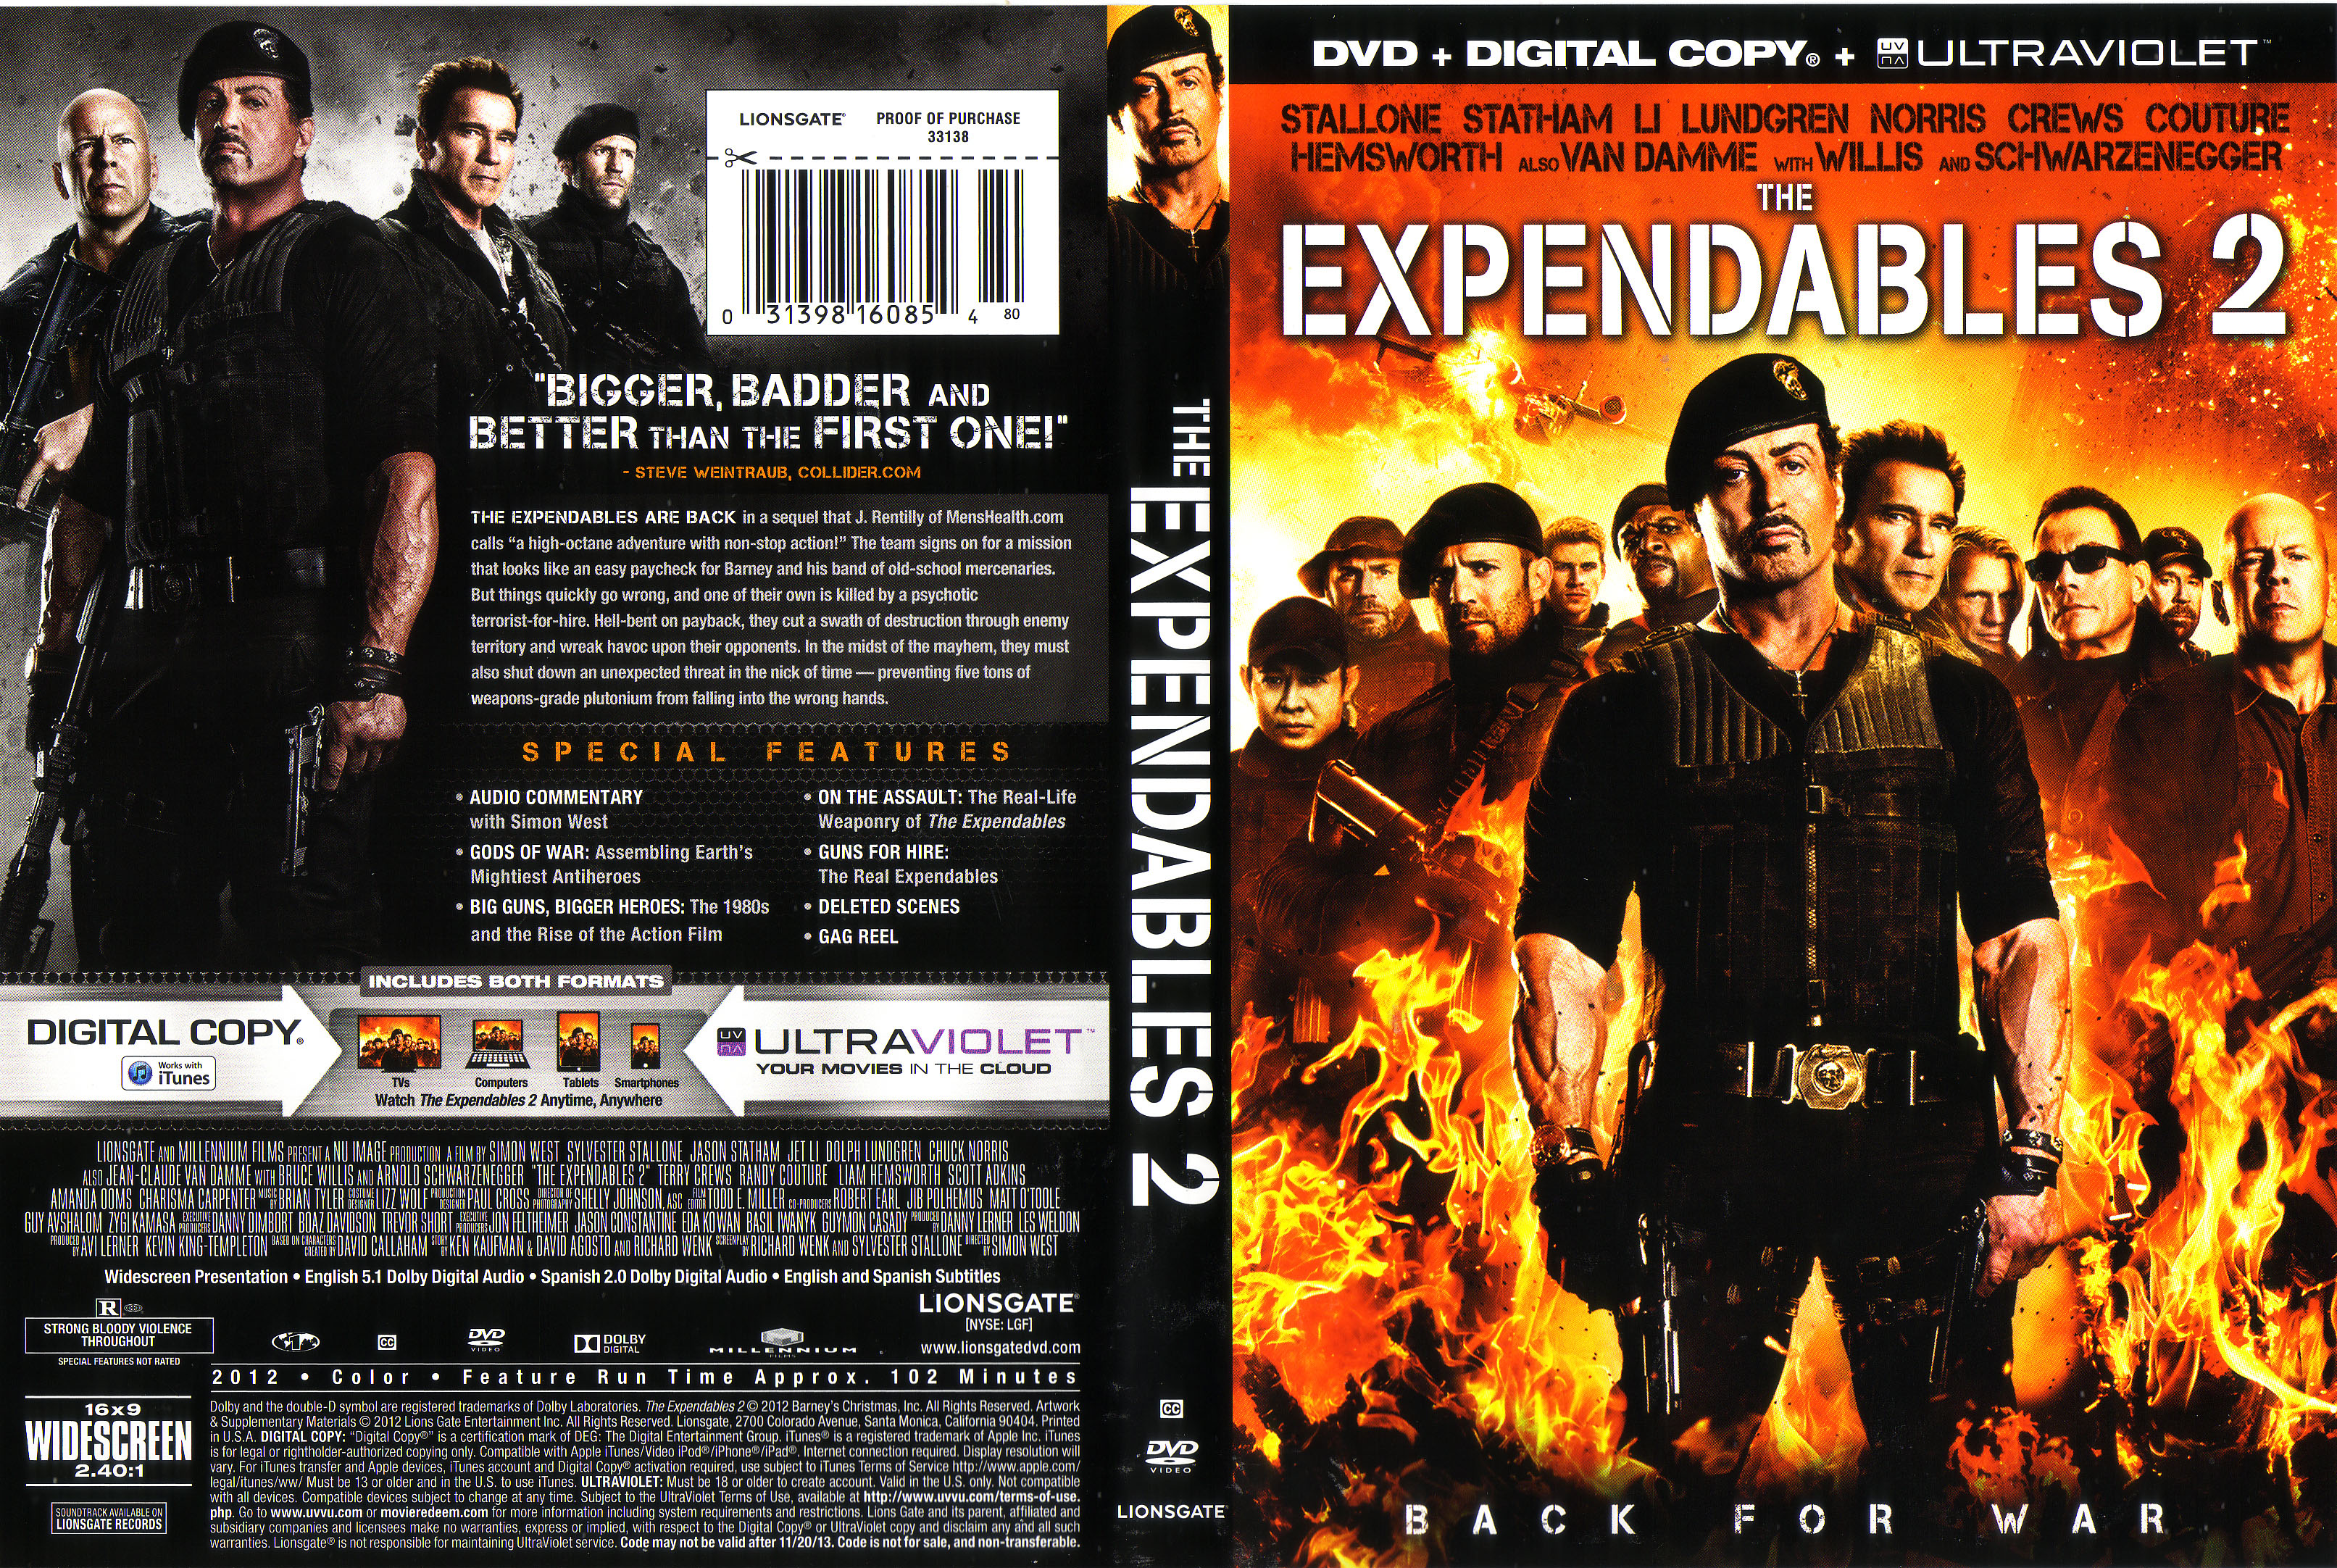 Неудержимый книга i. The Expendables 2, 2012 DVD Cover. Чак Норрис Неудержимые 2. Неудержимые 2 2012 обложка диска DVD. Expendables DVD Cover.